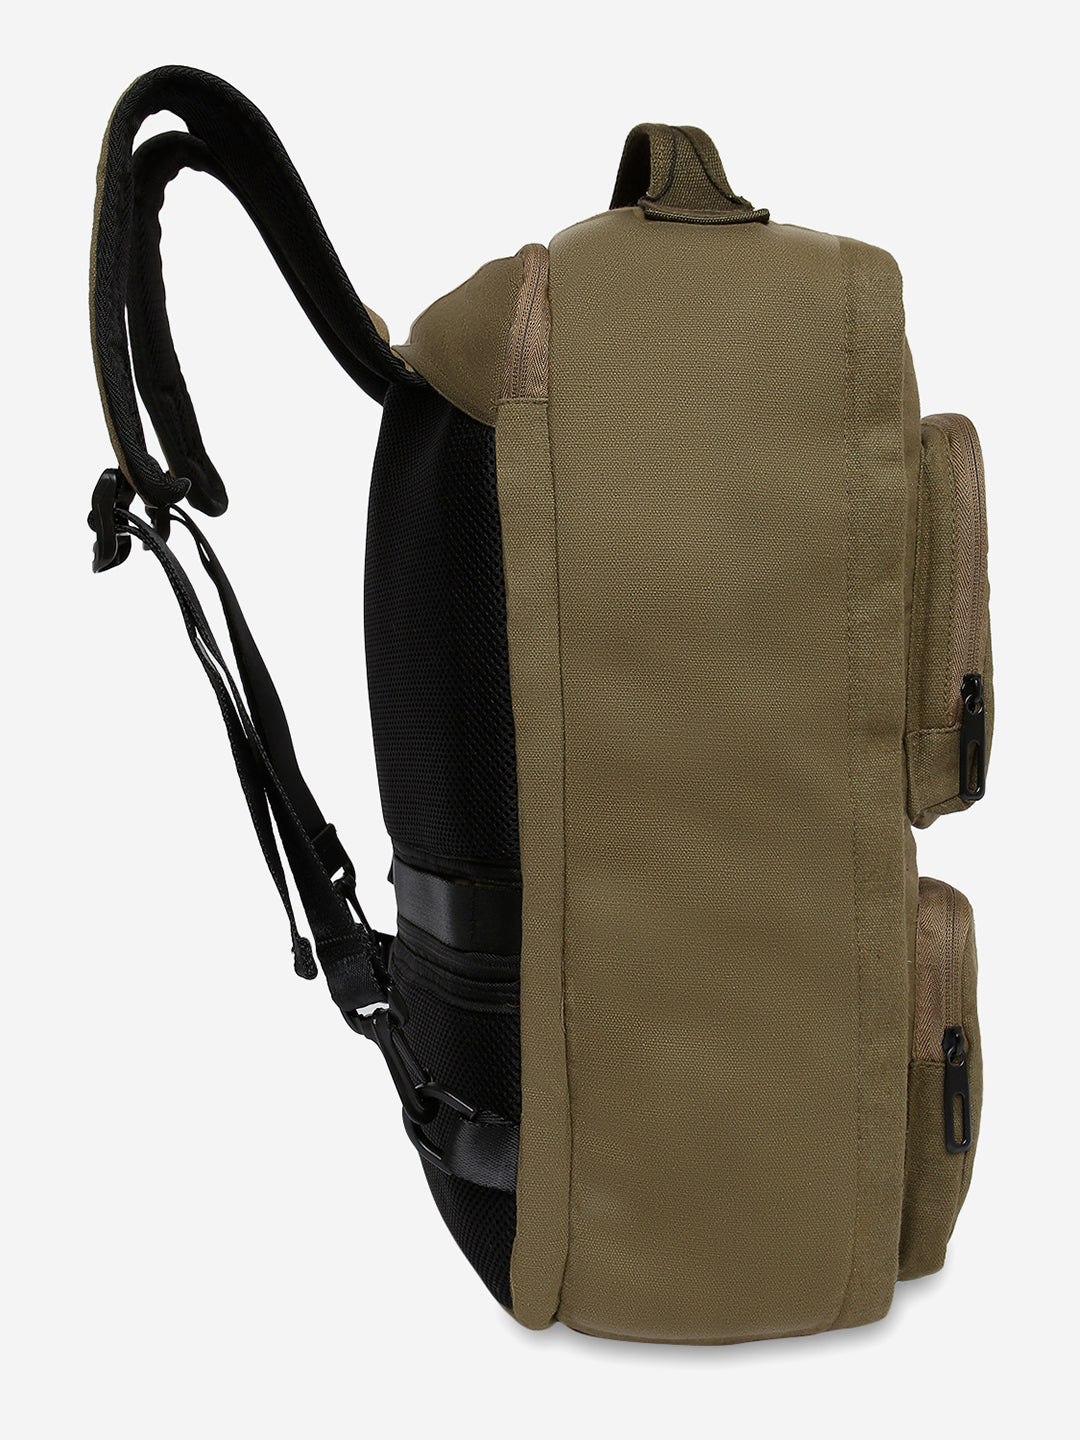 Spykar Olive Canvas Casual Traveler Backpacks